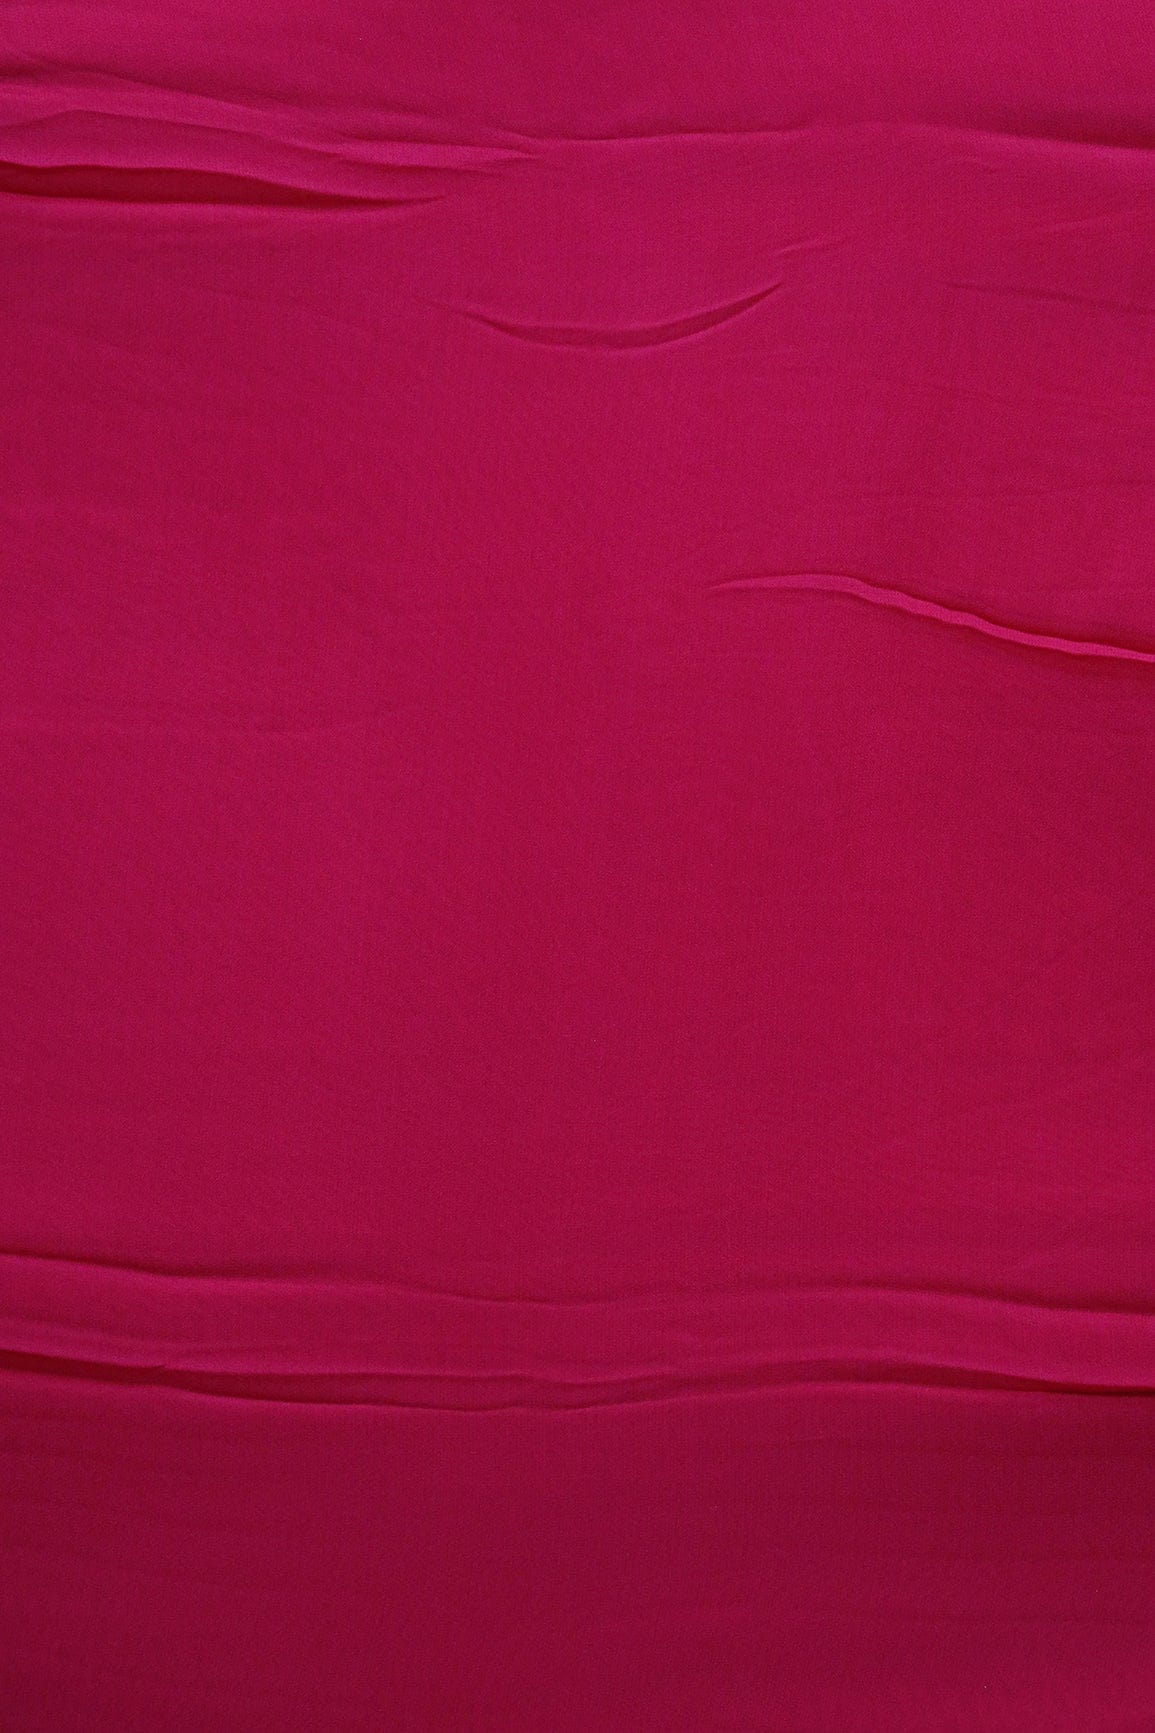 doeraa Plain Fabrics Fuchsia Dyed Viscose Georgette Fabric